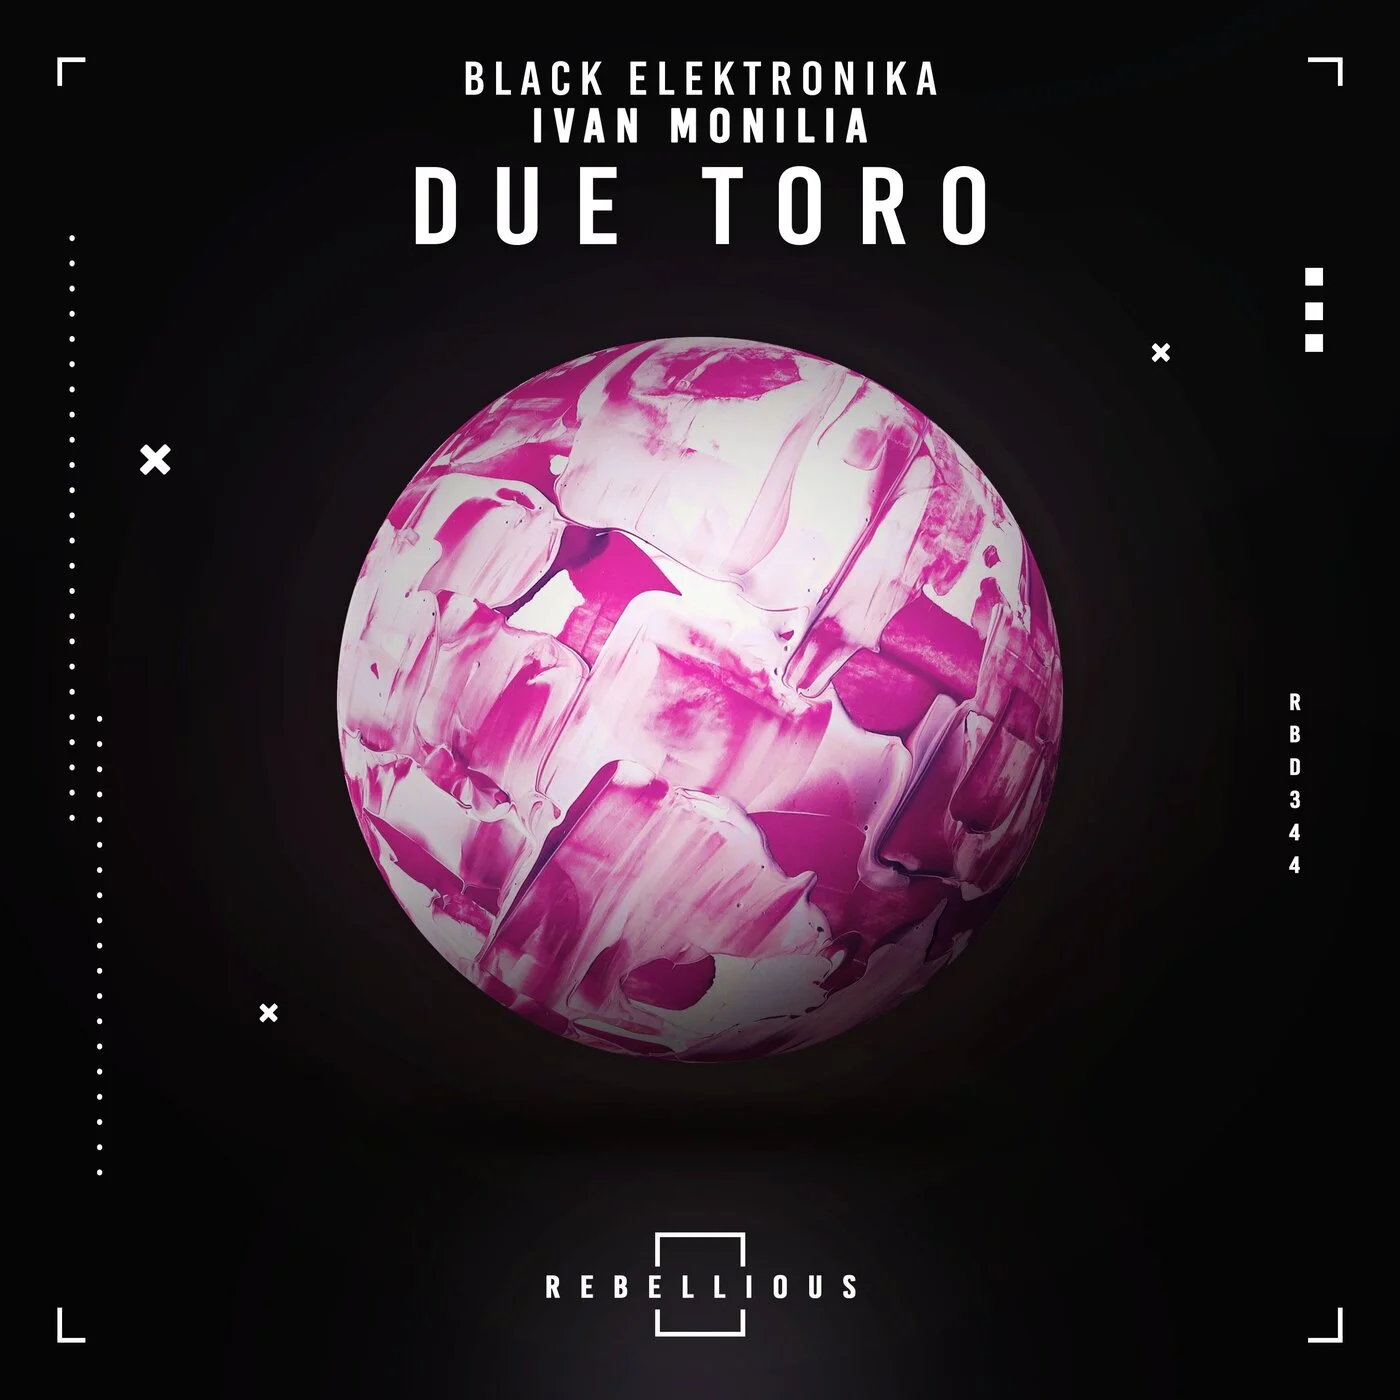 Black elektronika due toro cover